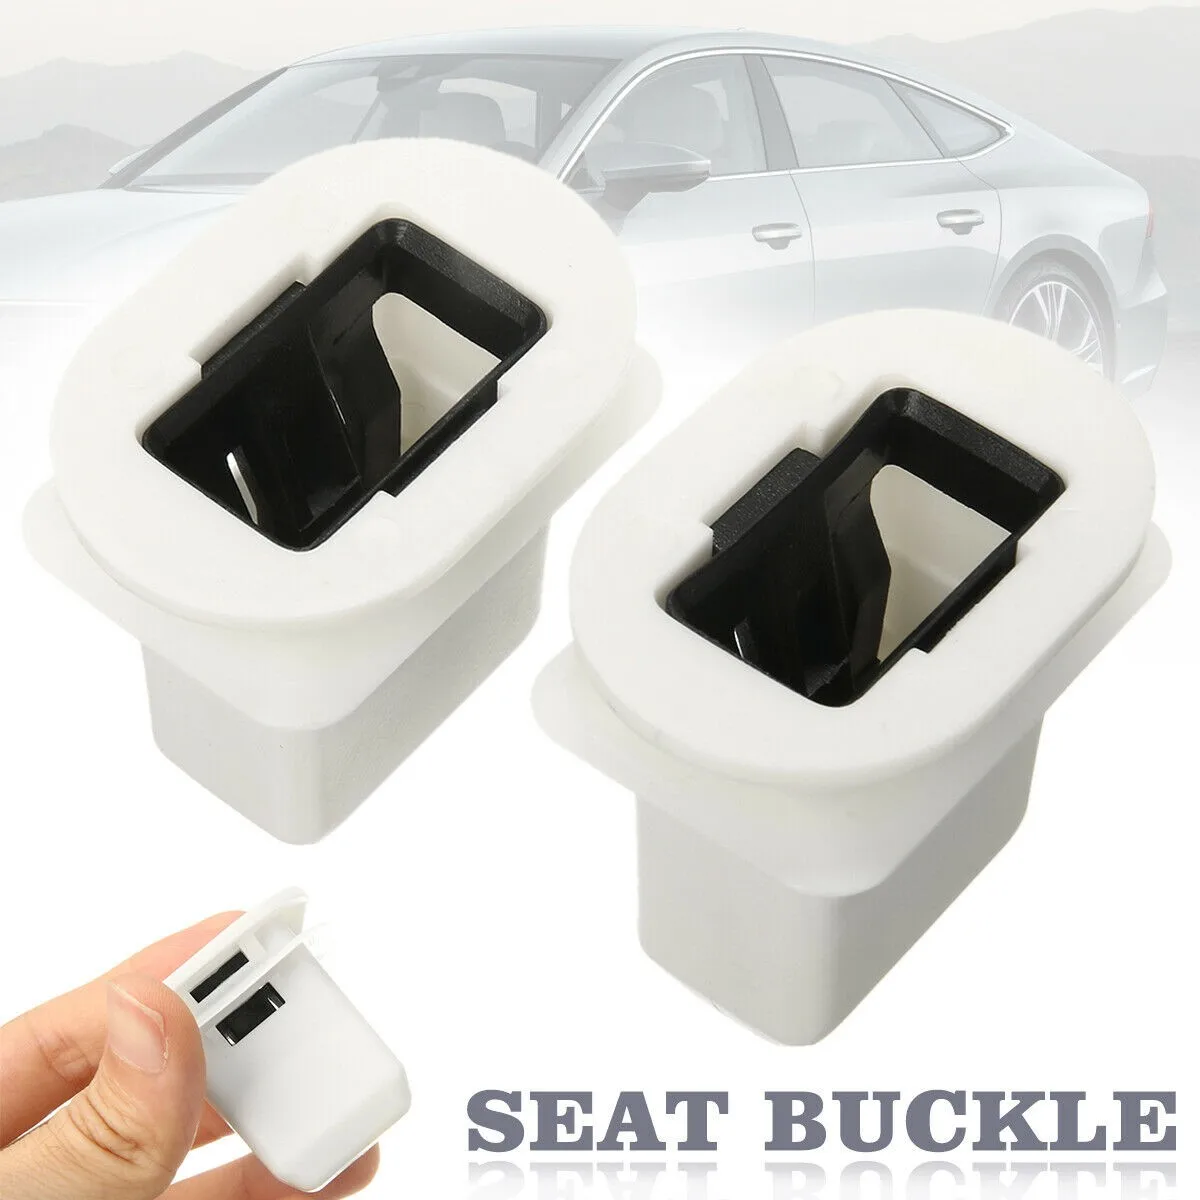 

2x Rear Seat Bench Clip 4L0 886 373 Accessories Bracket Clip For Q7 A4 A6 S4 S6